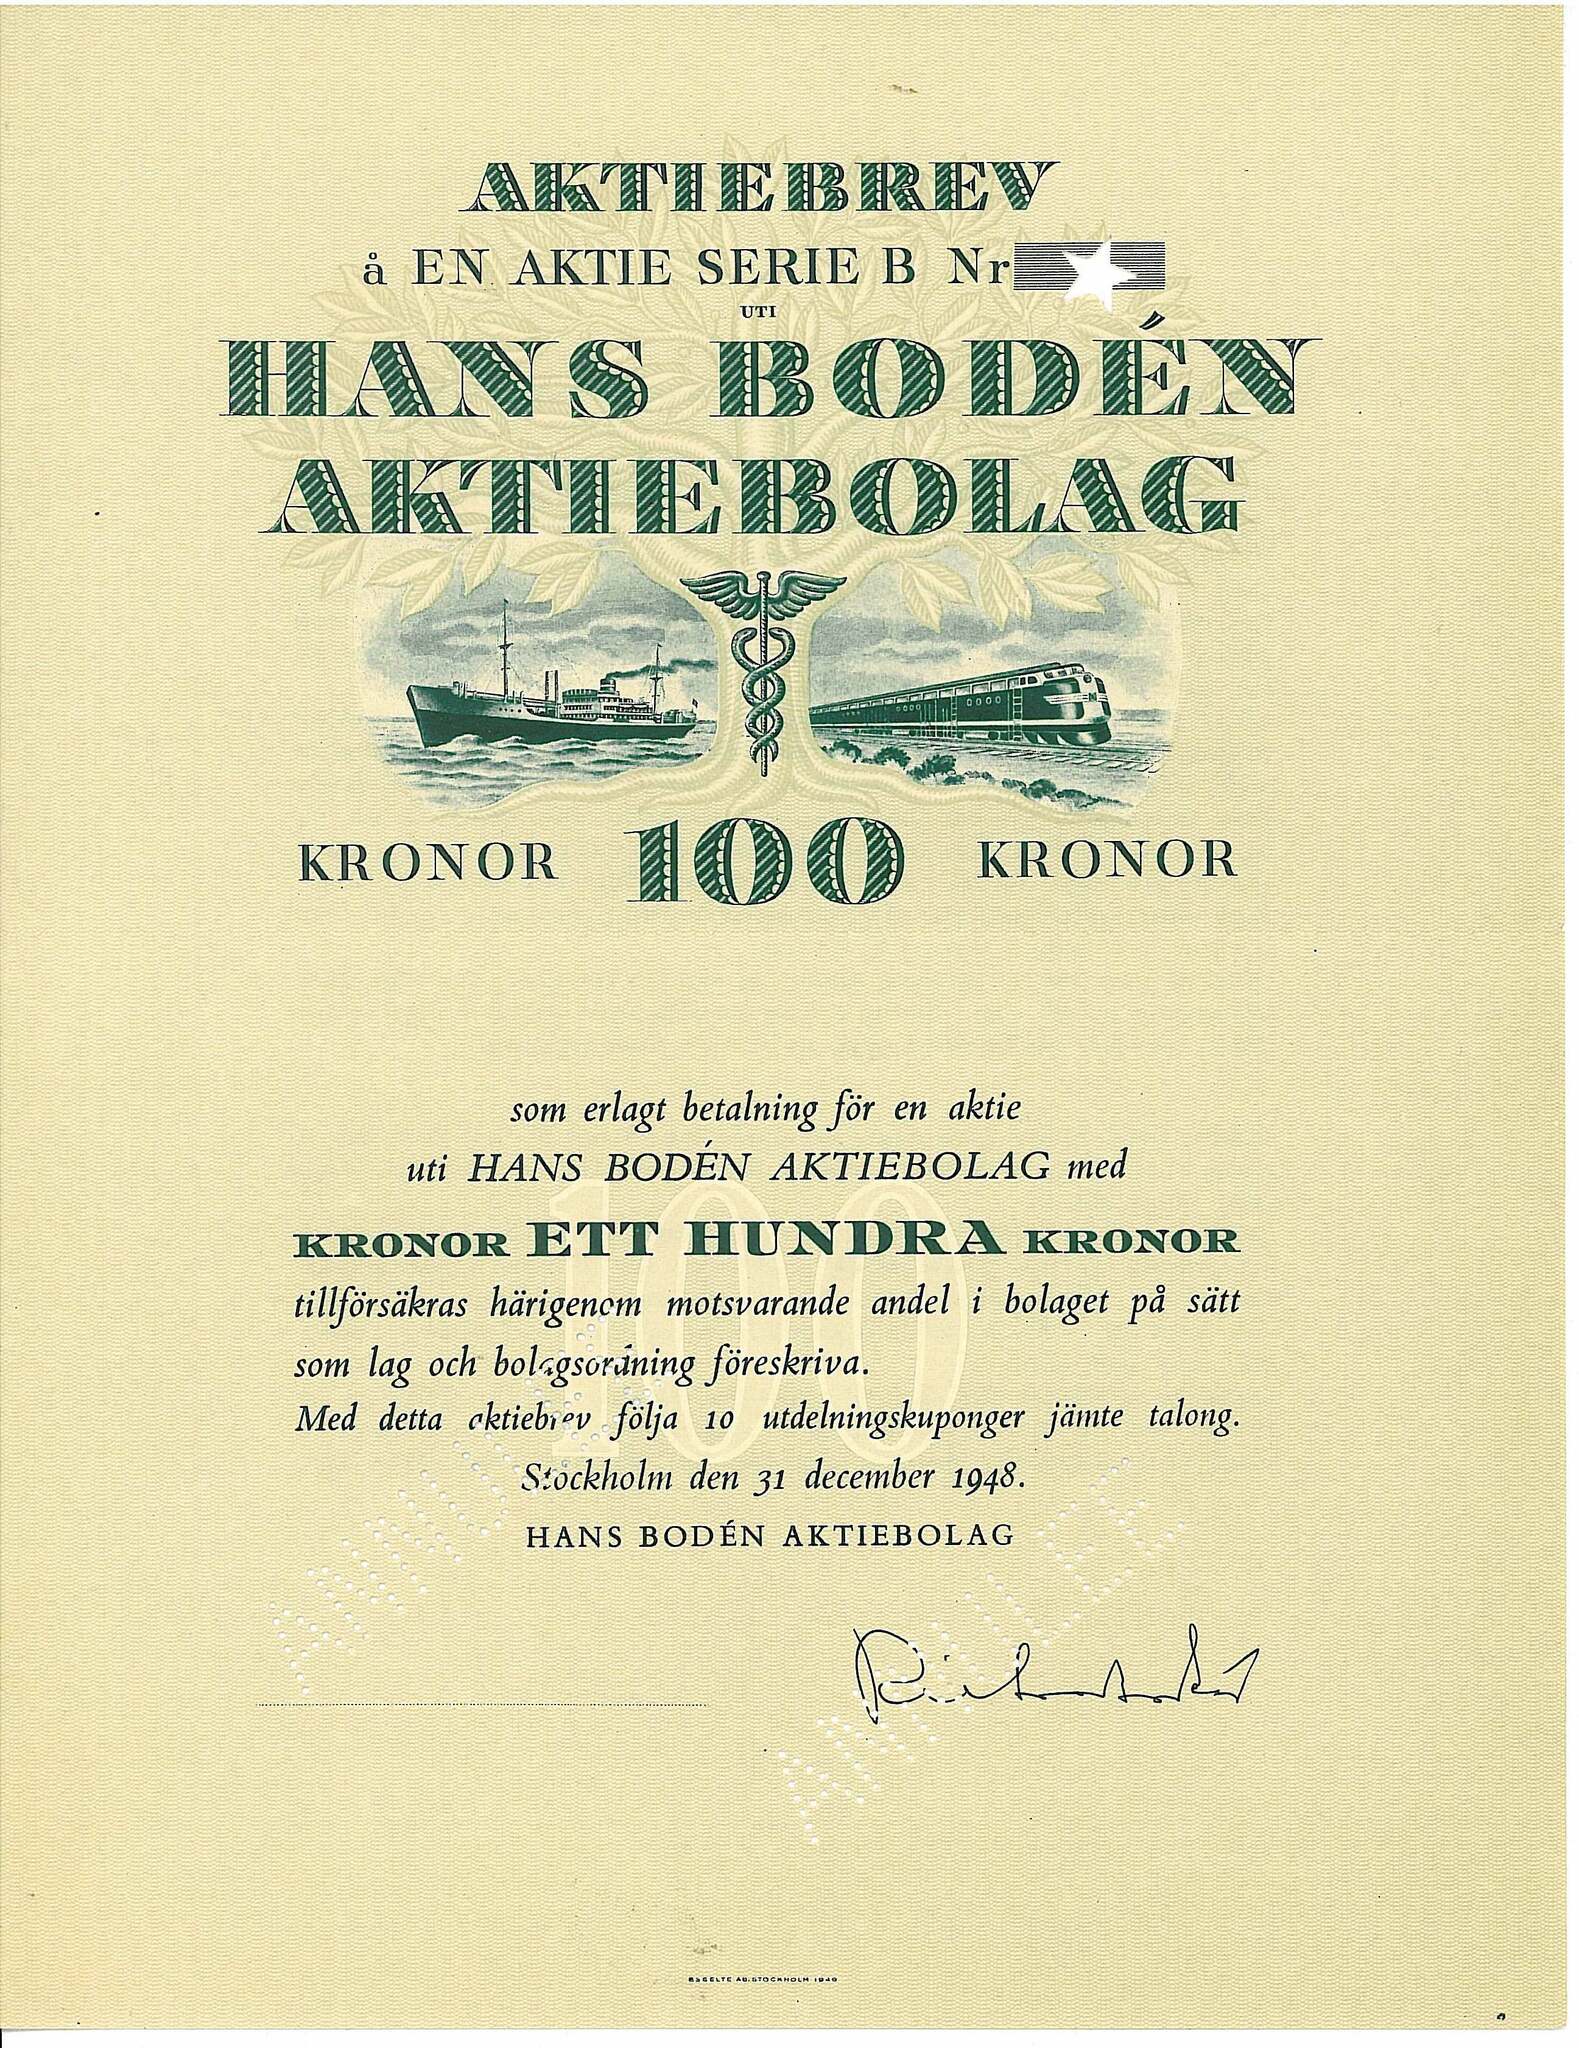 Hans Bodén AB